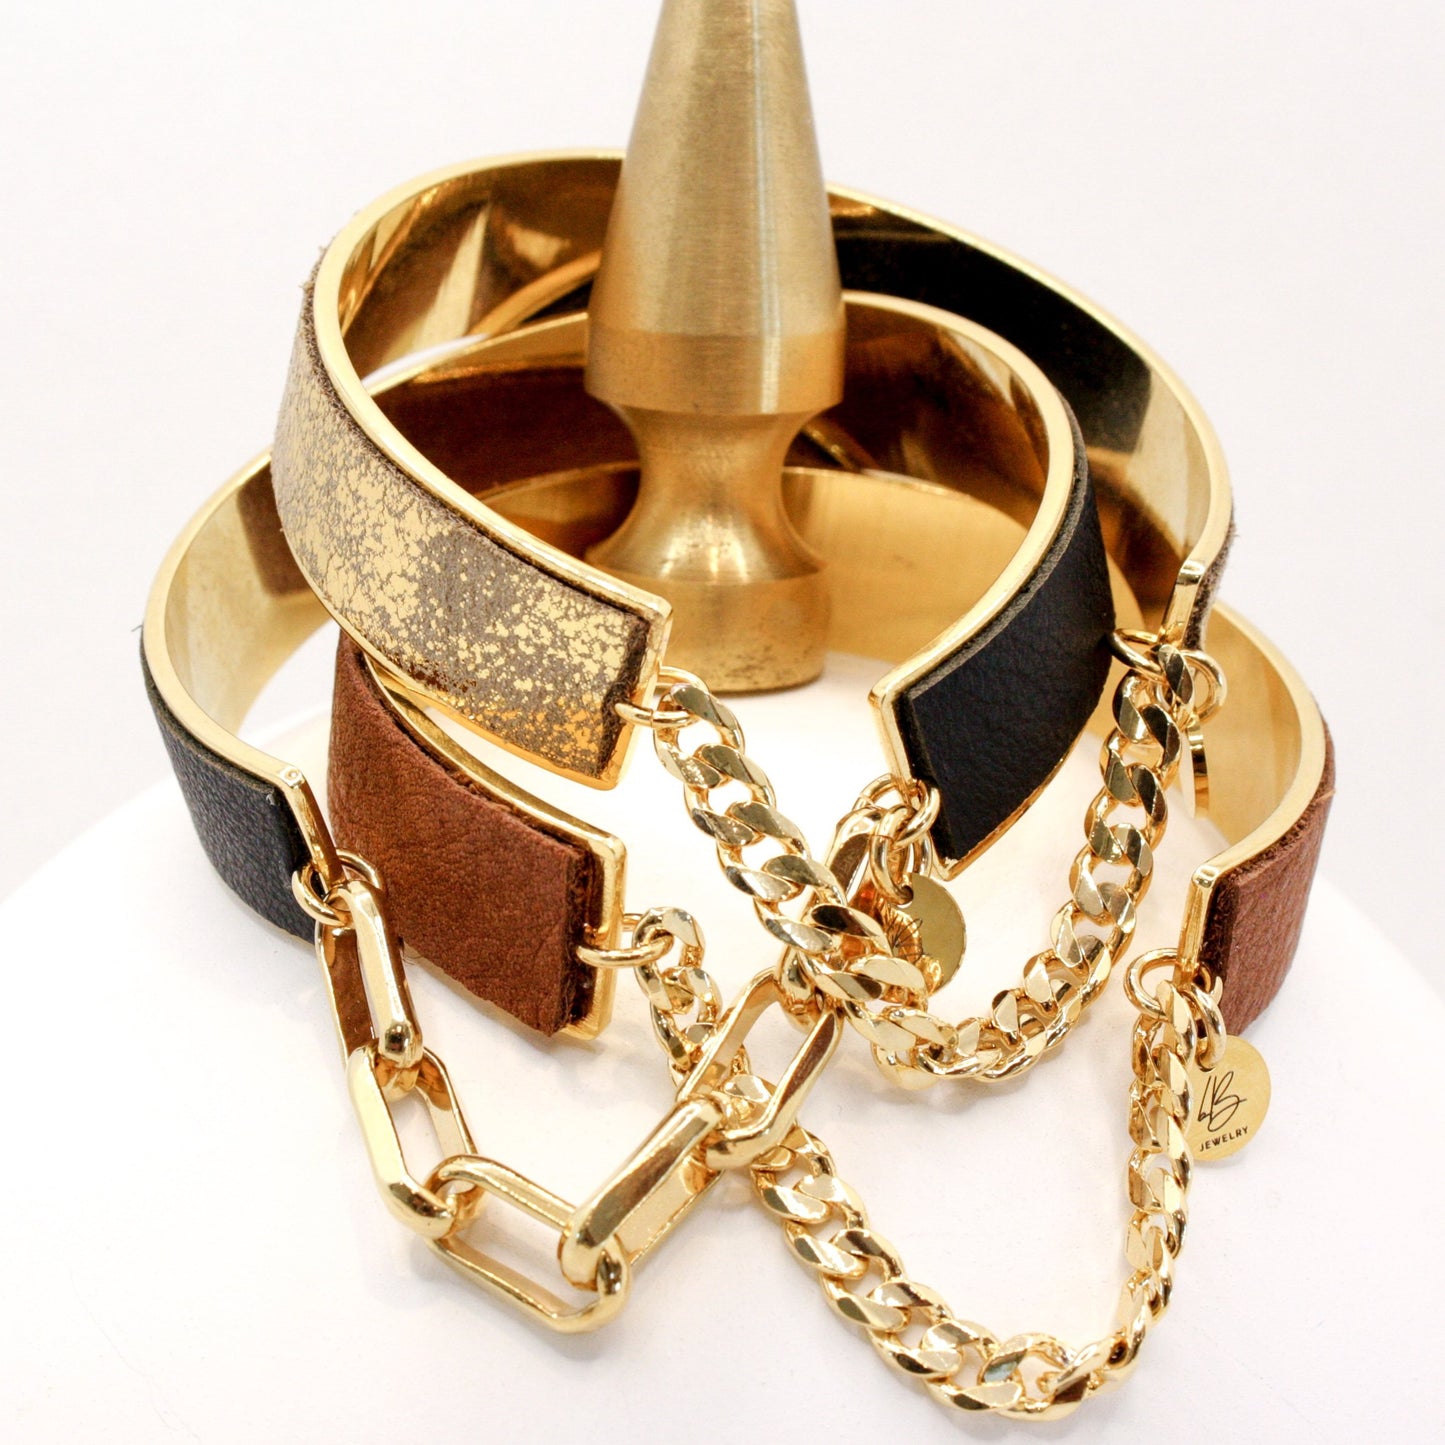 Bijoux Leather & Chain Cuff Bracelet : Camel